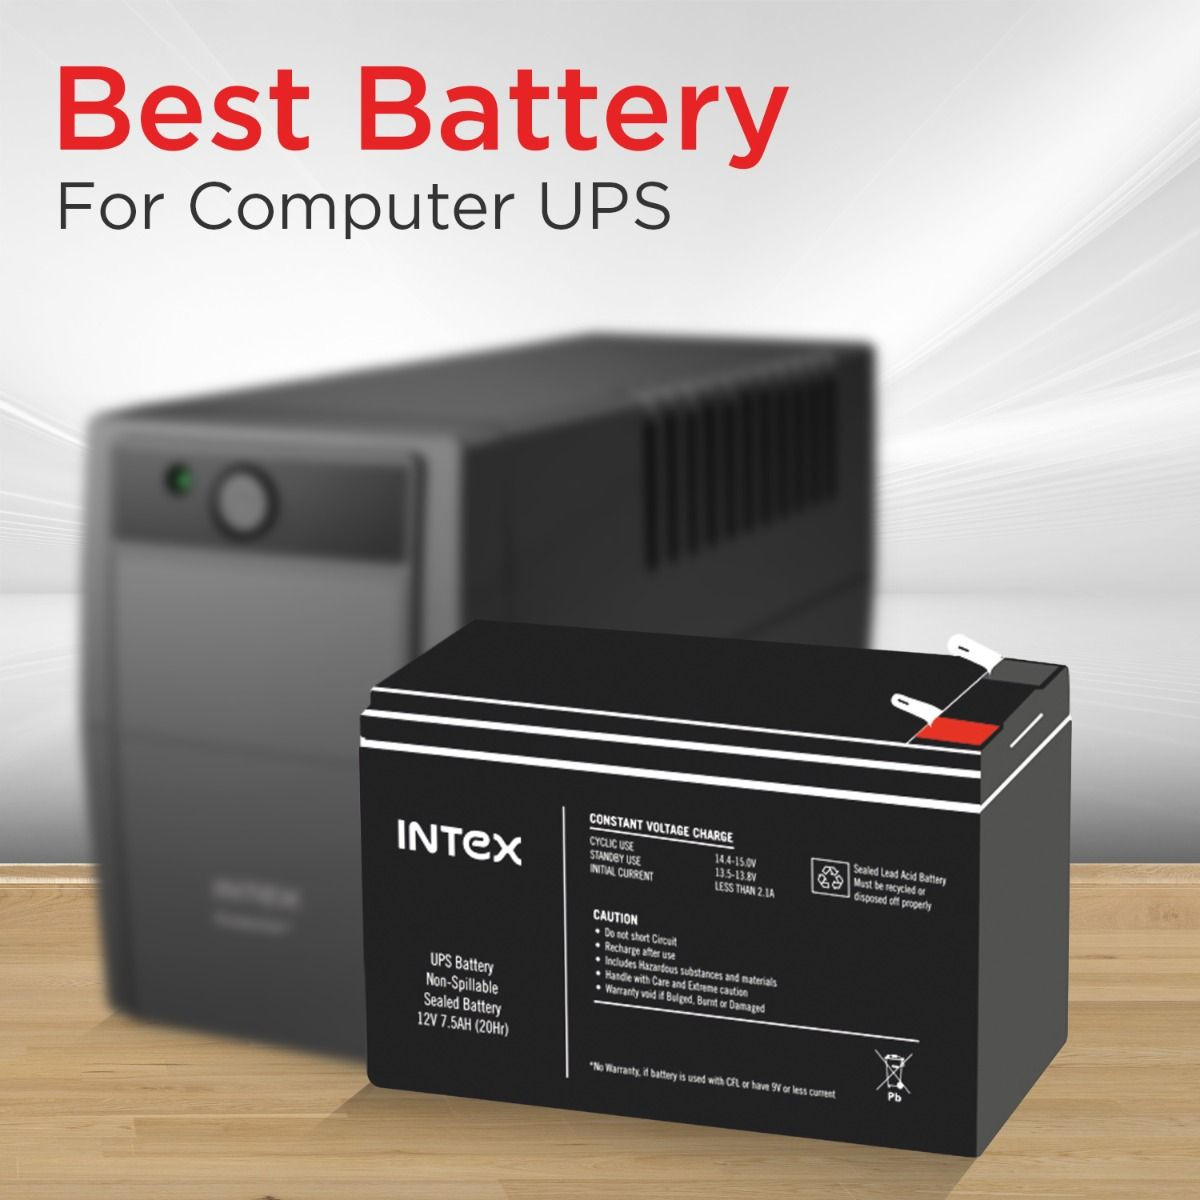 Intex 12v 7ah Ups Battery Sgl Global Technologies